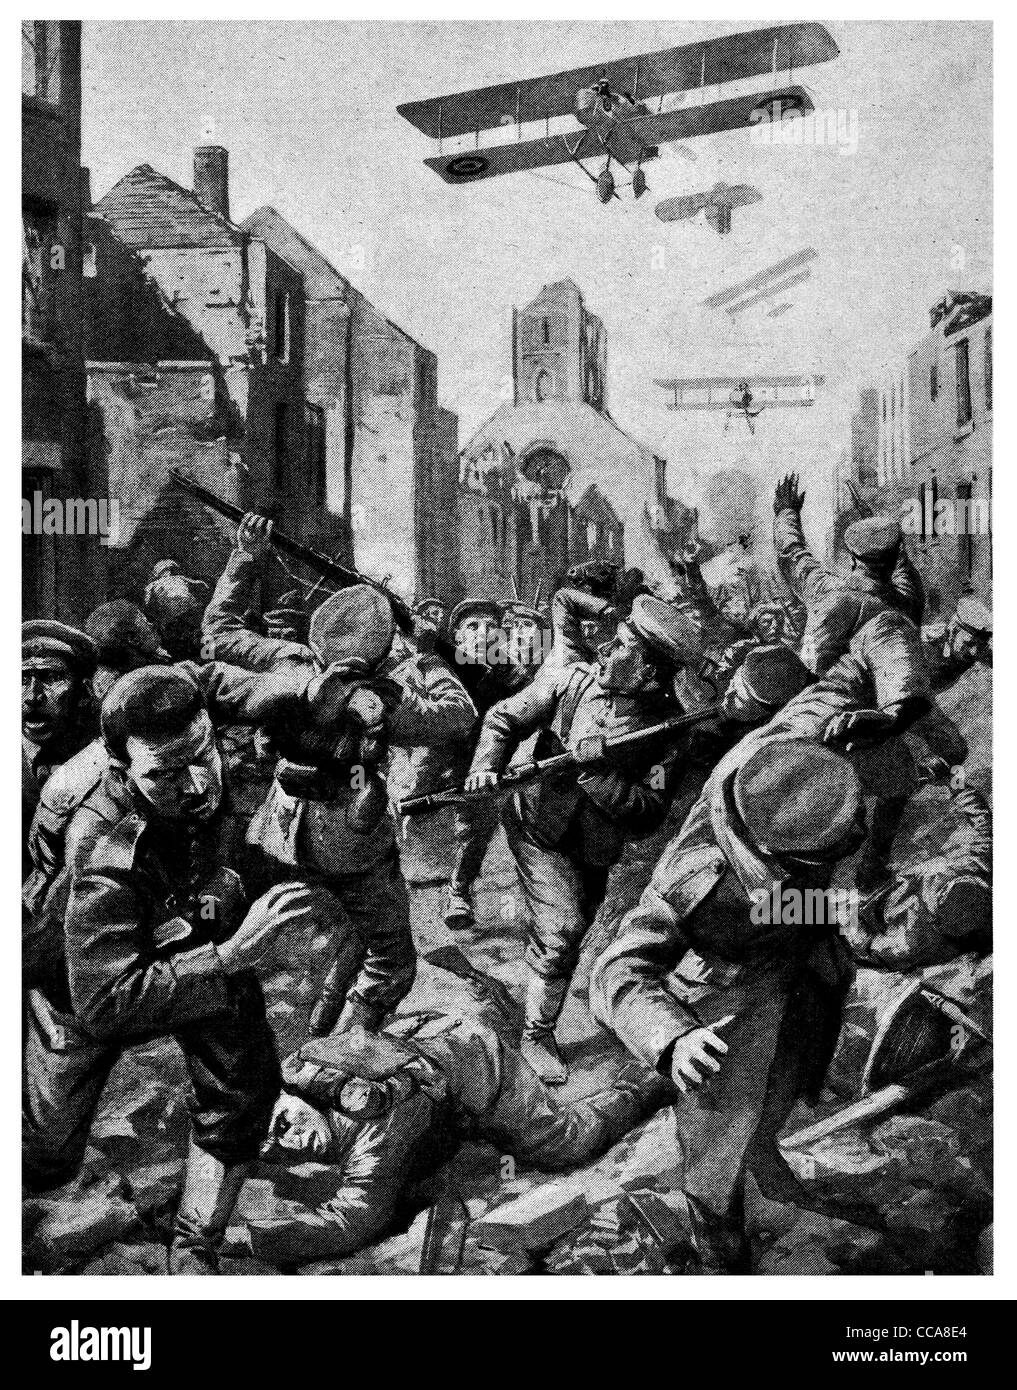 1917 3 British airmen attacking German troops Lens Royal air force corps aircraft plane machine gun bombing bomb terror street Stock Photo